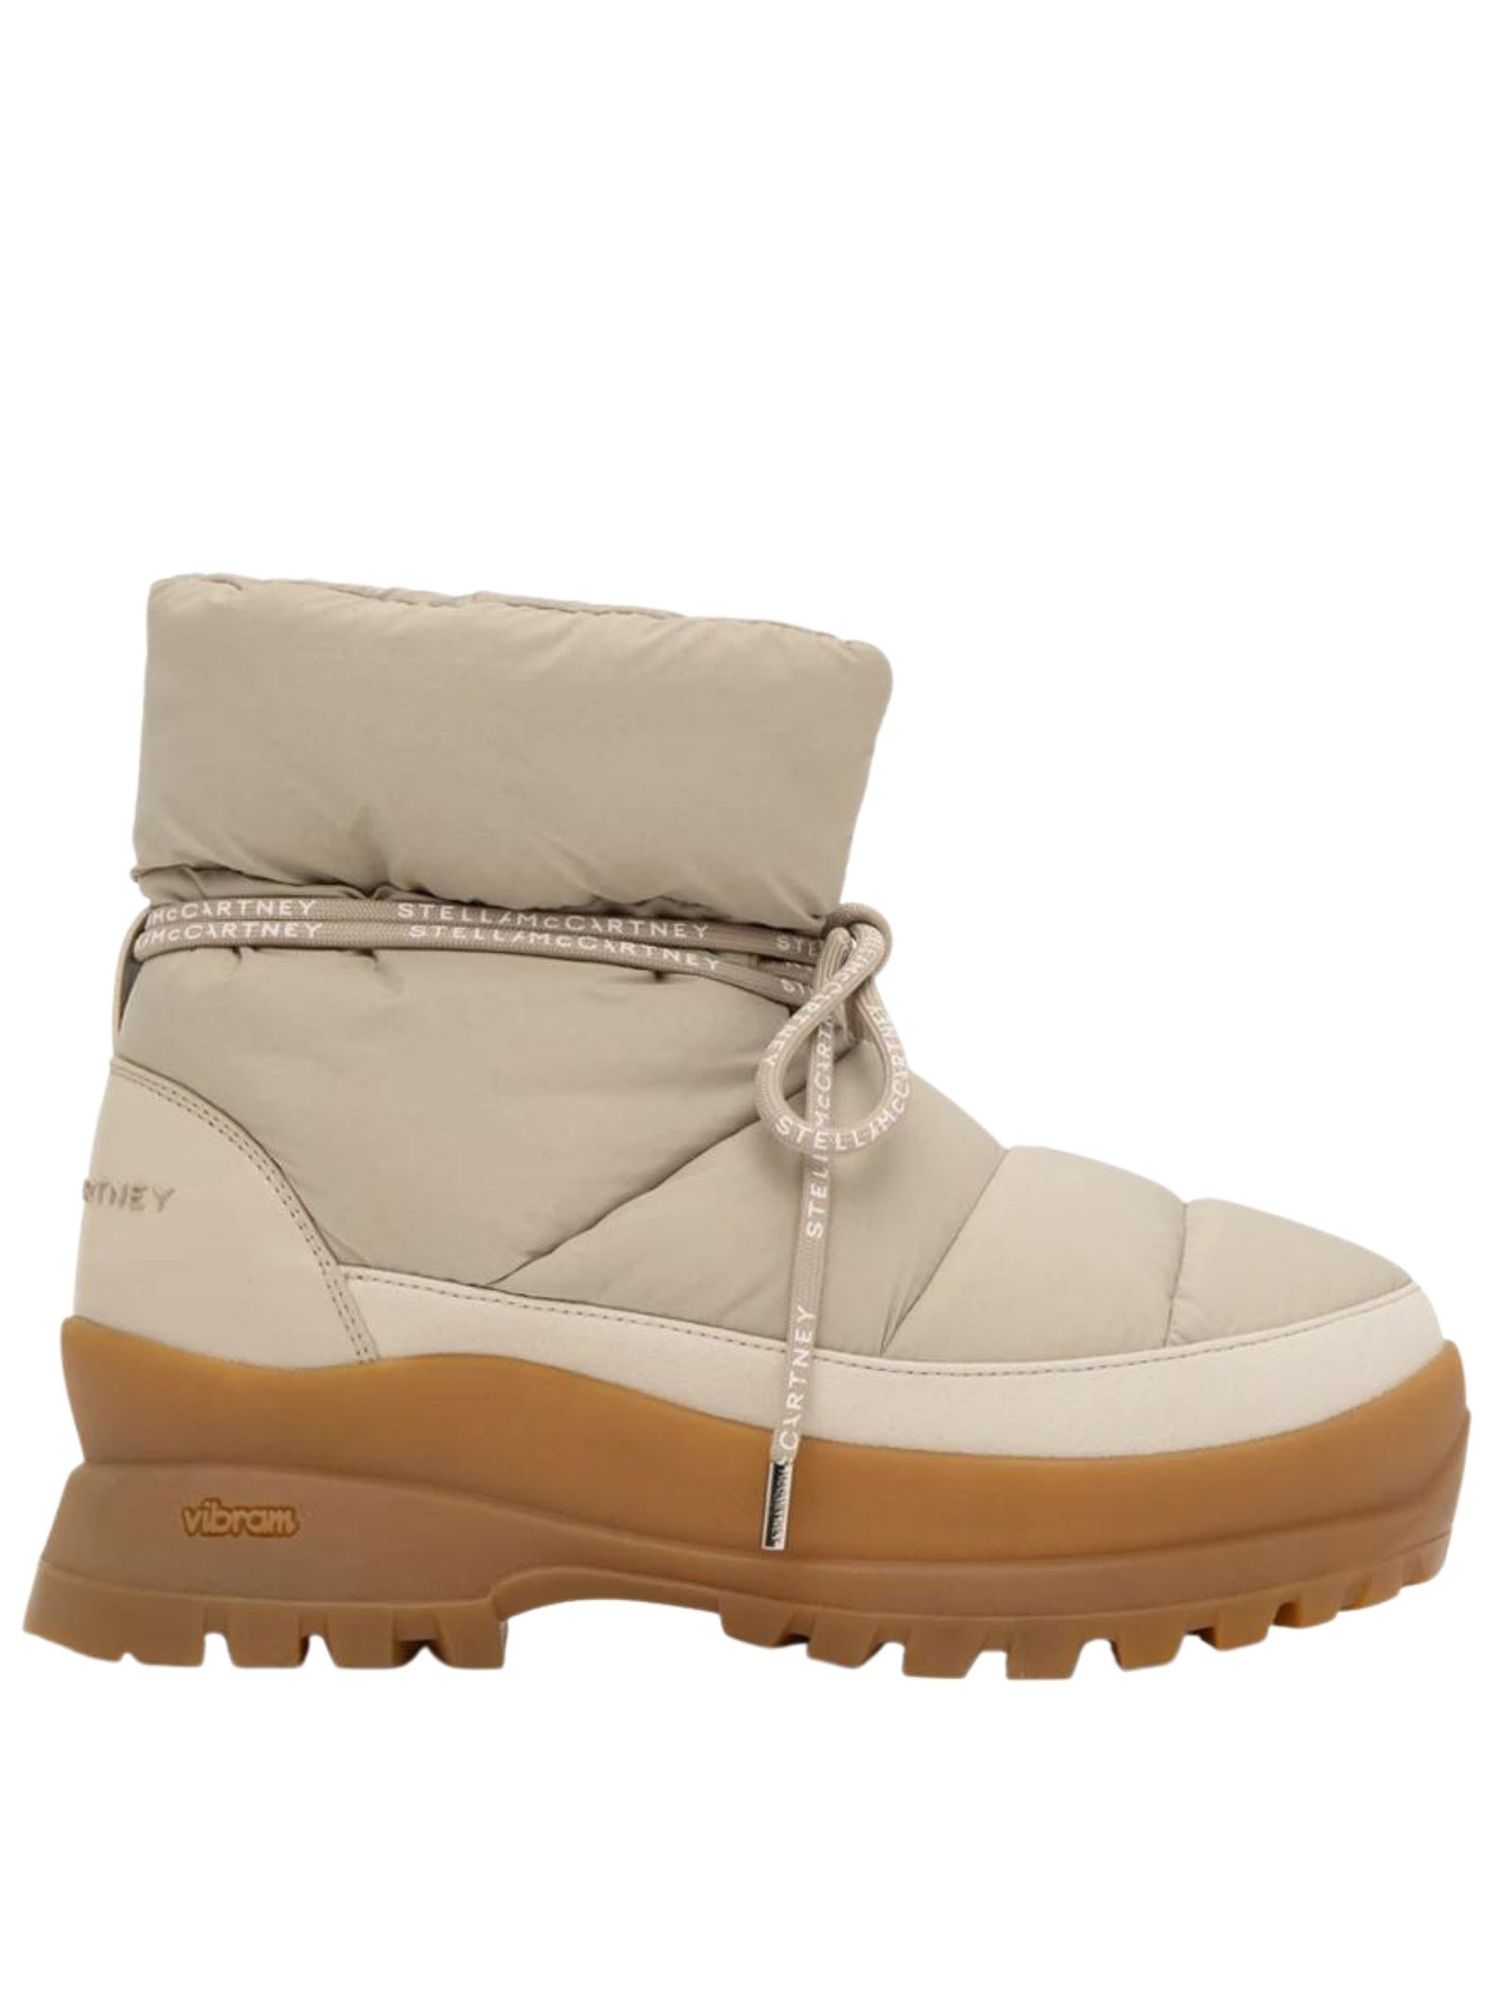 The boots now Vogue to Scandinavia - best buy 48 winter